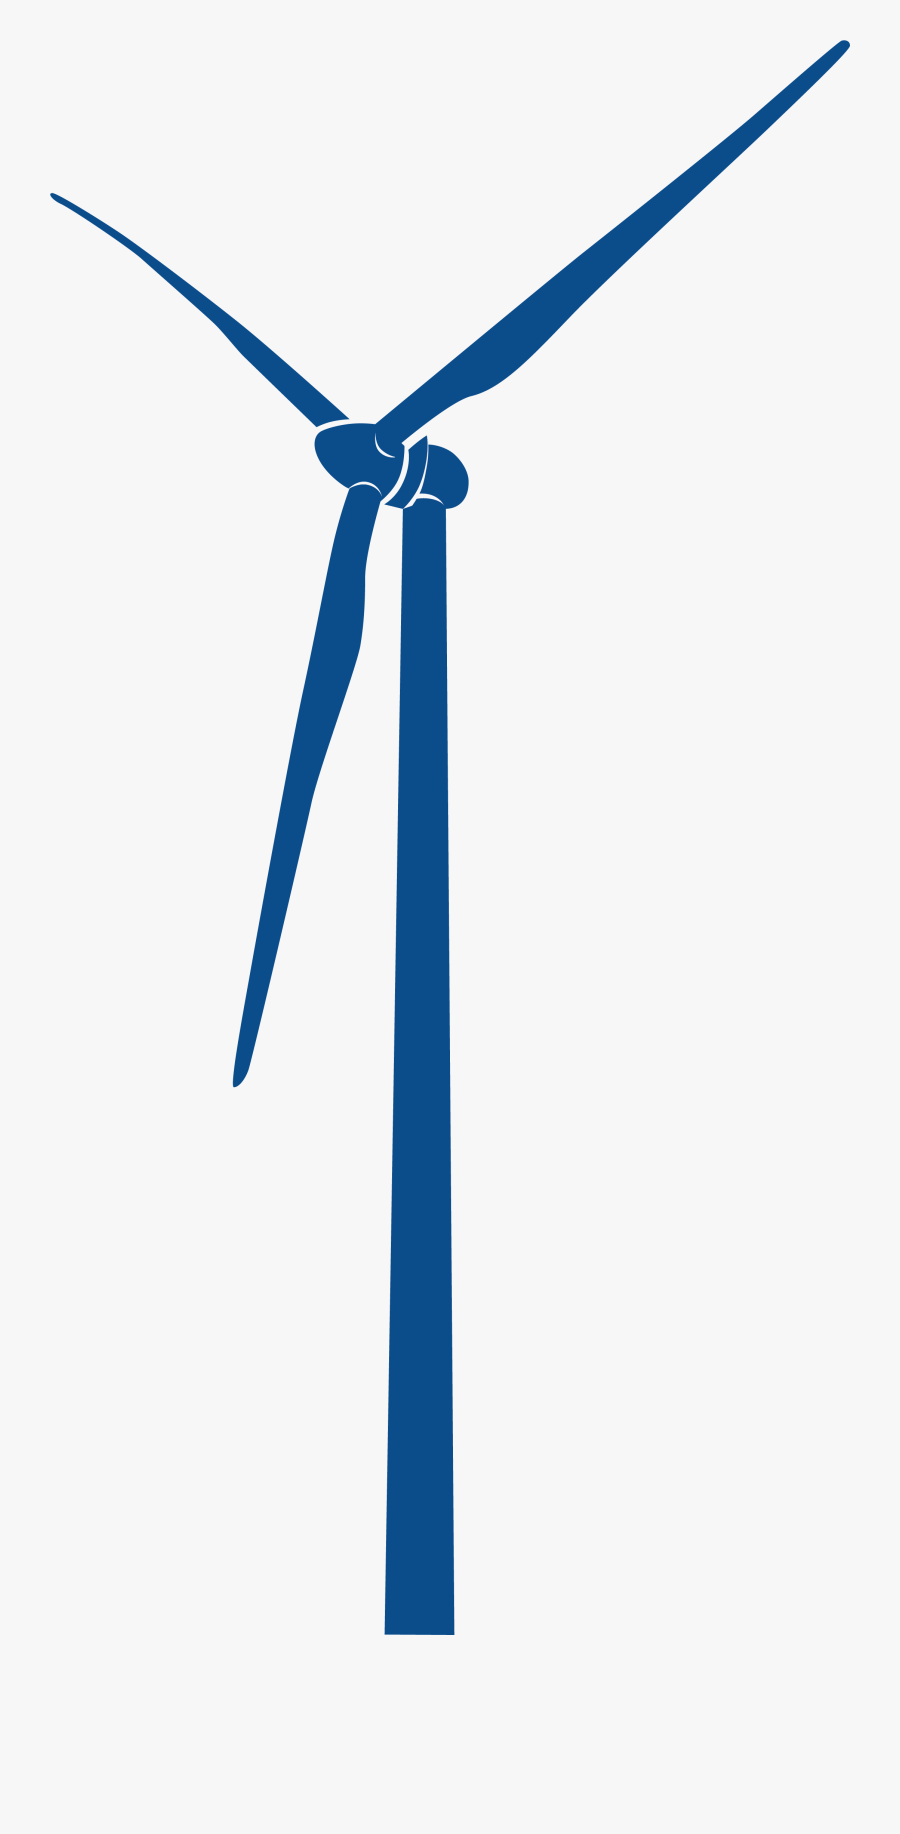 Wind Turbine Icon Symbolizing Environmental Benefits - Wind Turbine, Transparent Clipart